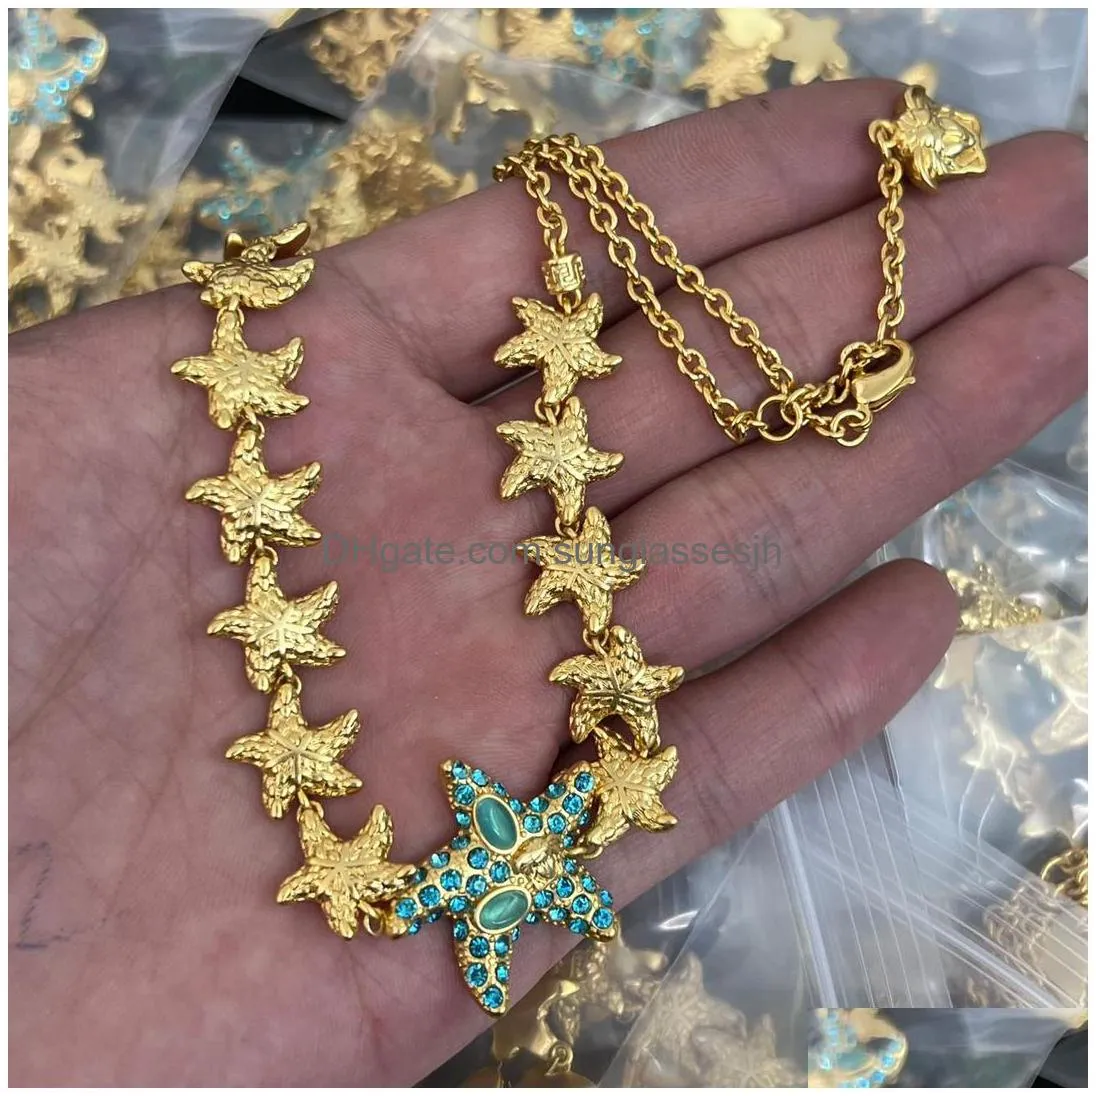 fashion designed necklaces bracelet earring starfish pendant sea travel holiday style banshee  head portrait 18k gold plated designer jewelry